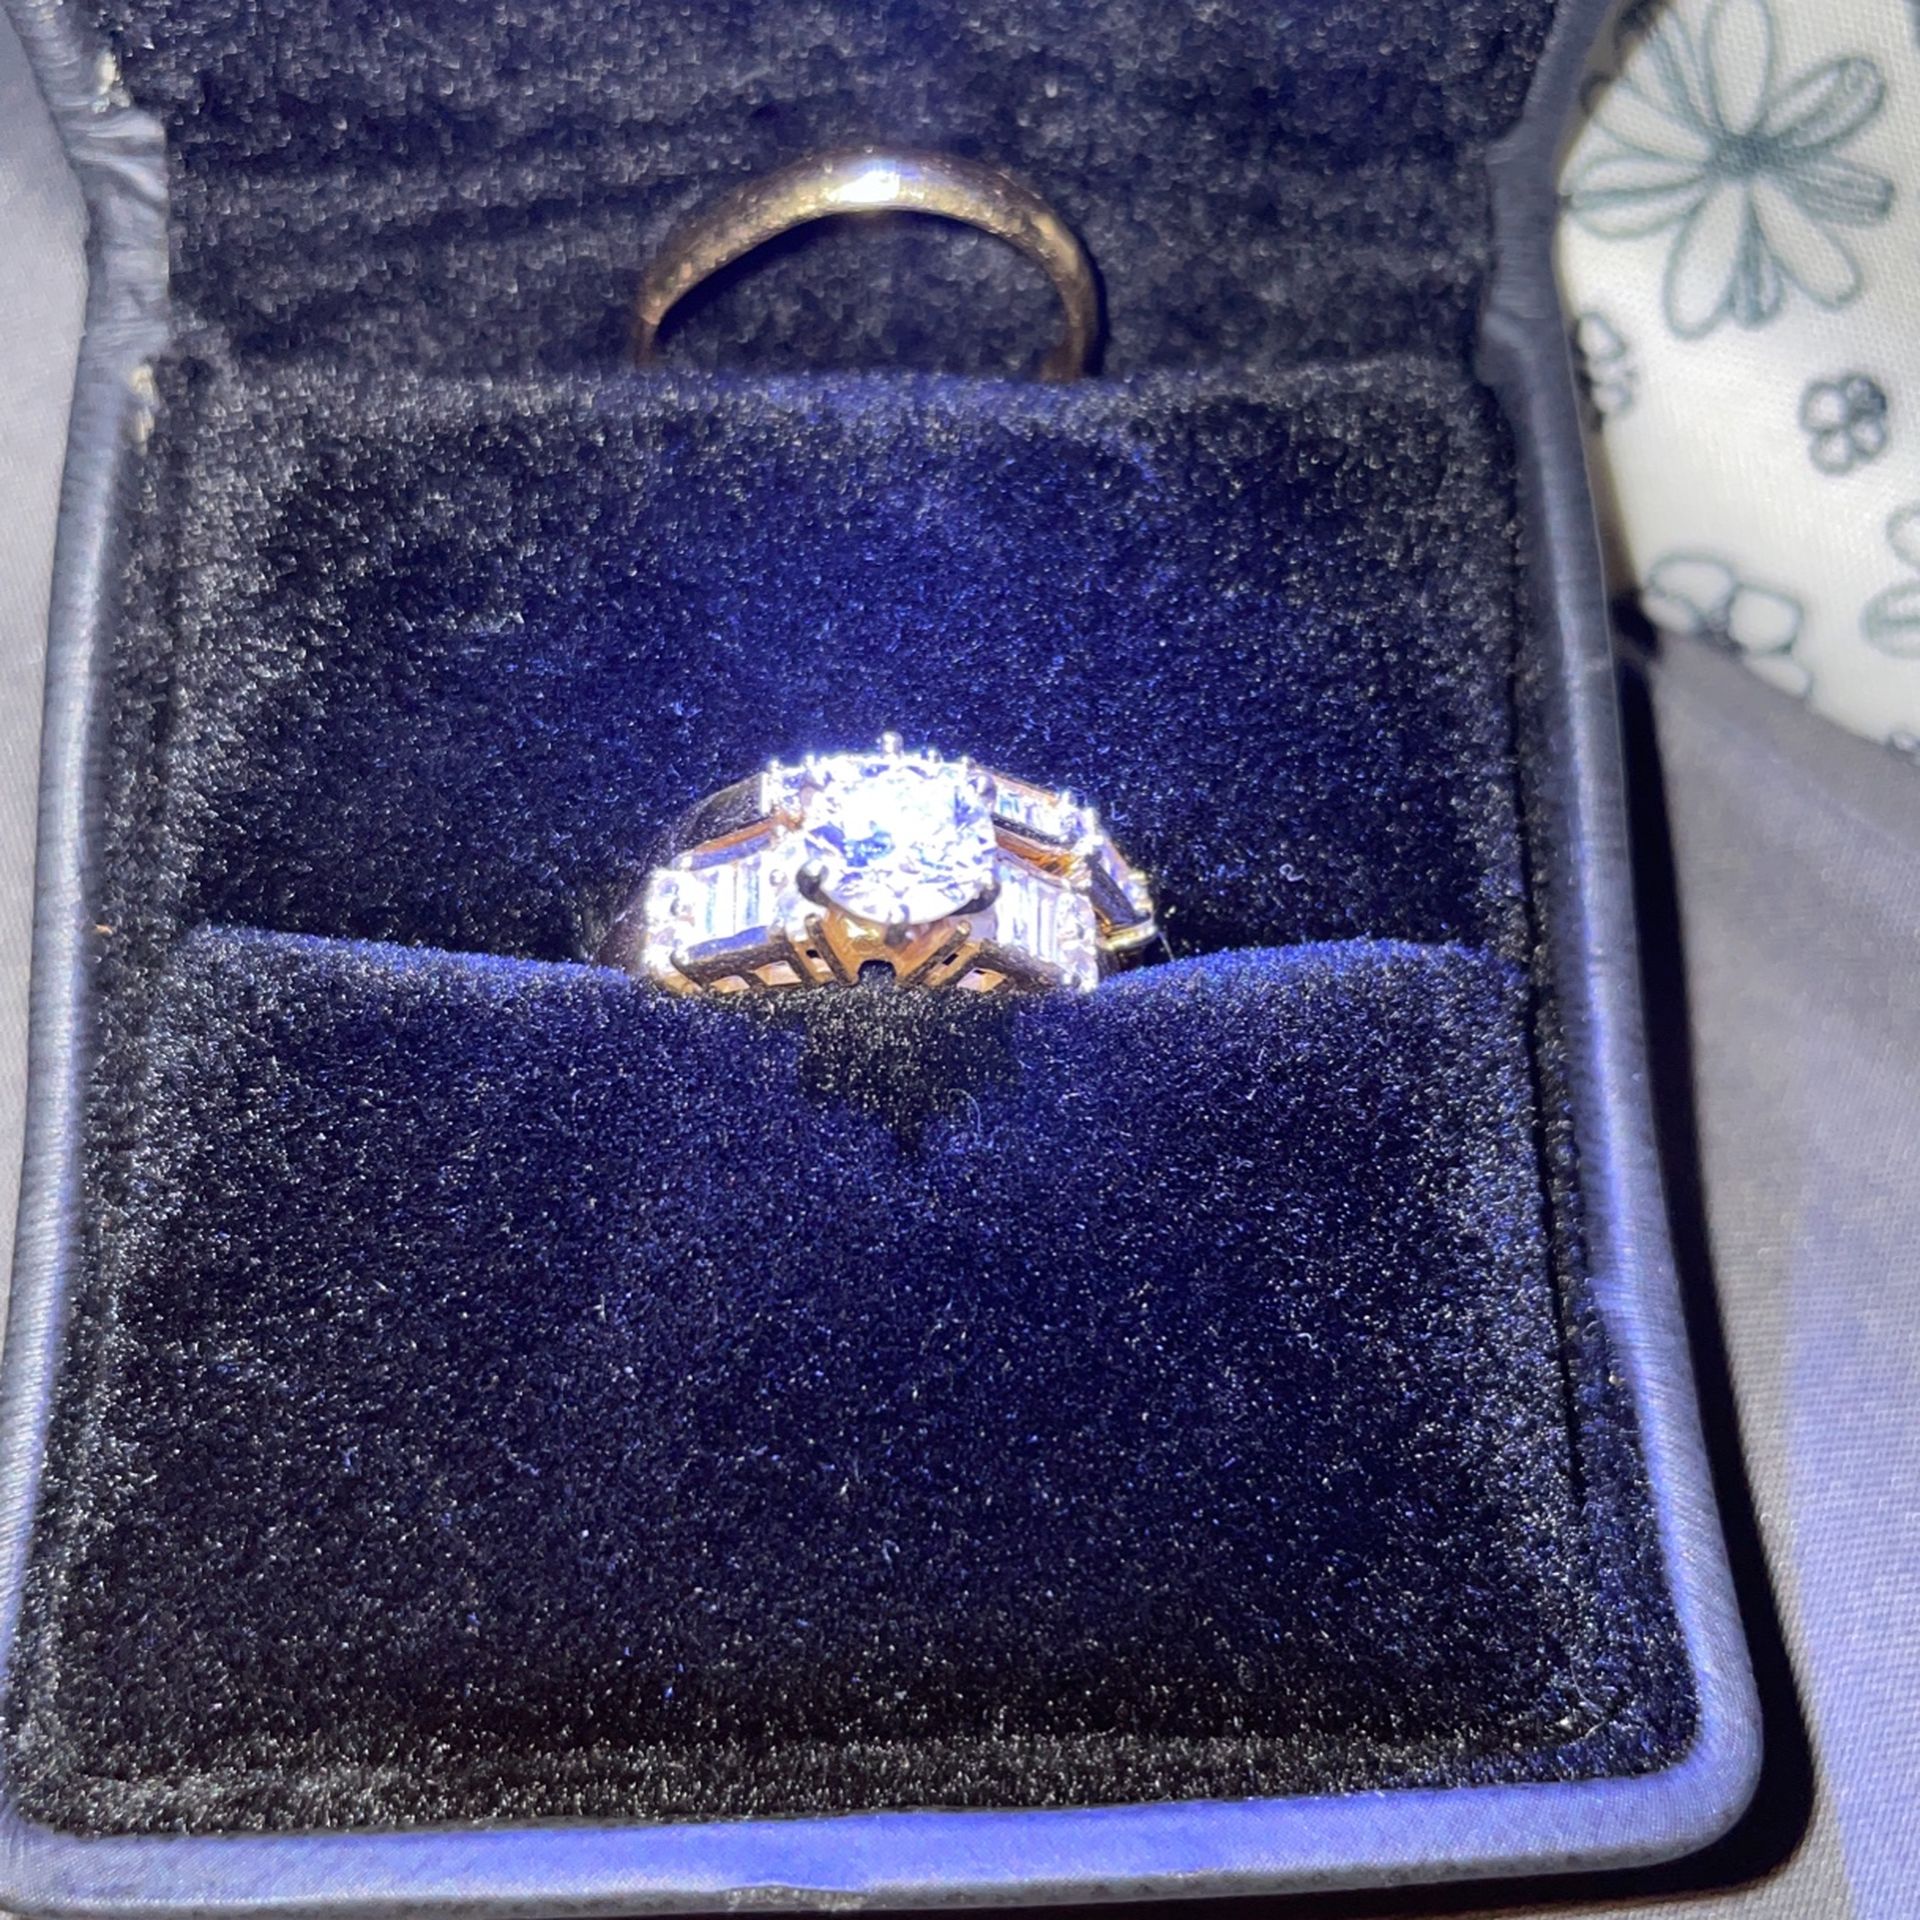 14k Real Gold Diamond Engagement Ring